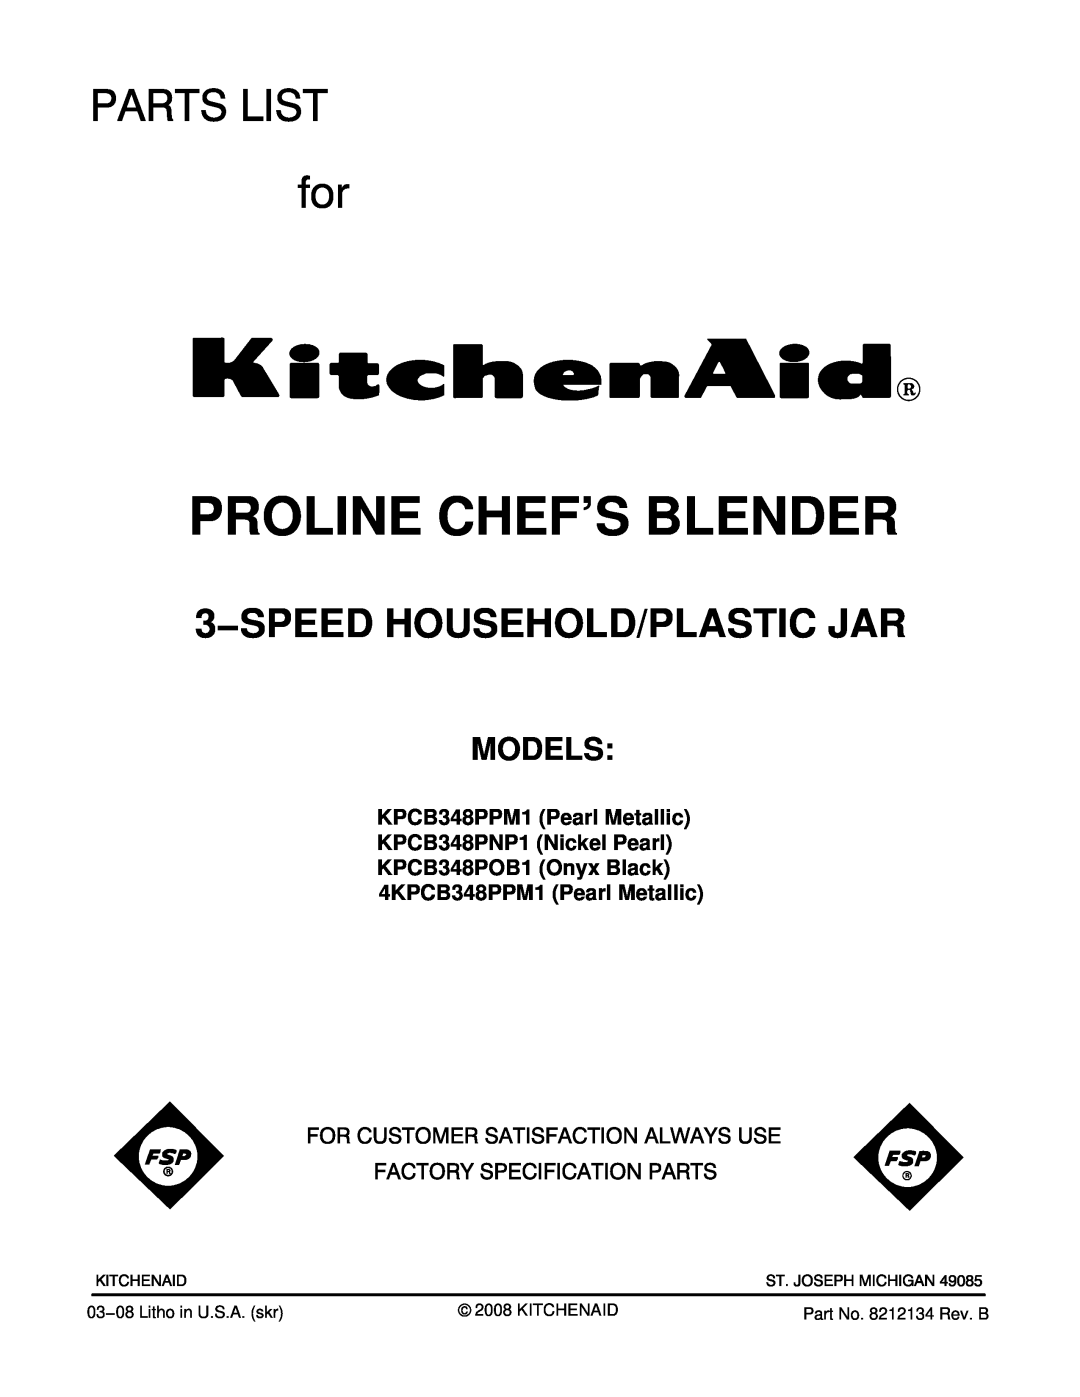 KitchenAid KPCB348POB1 manual Models, KPCB348PPM1 Pearl Metallic KPCB348PNP1 Nickel Pearl, Proline Chefs Blender 